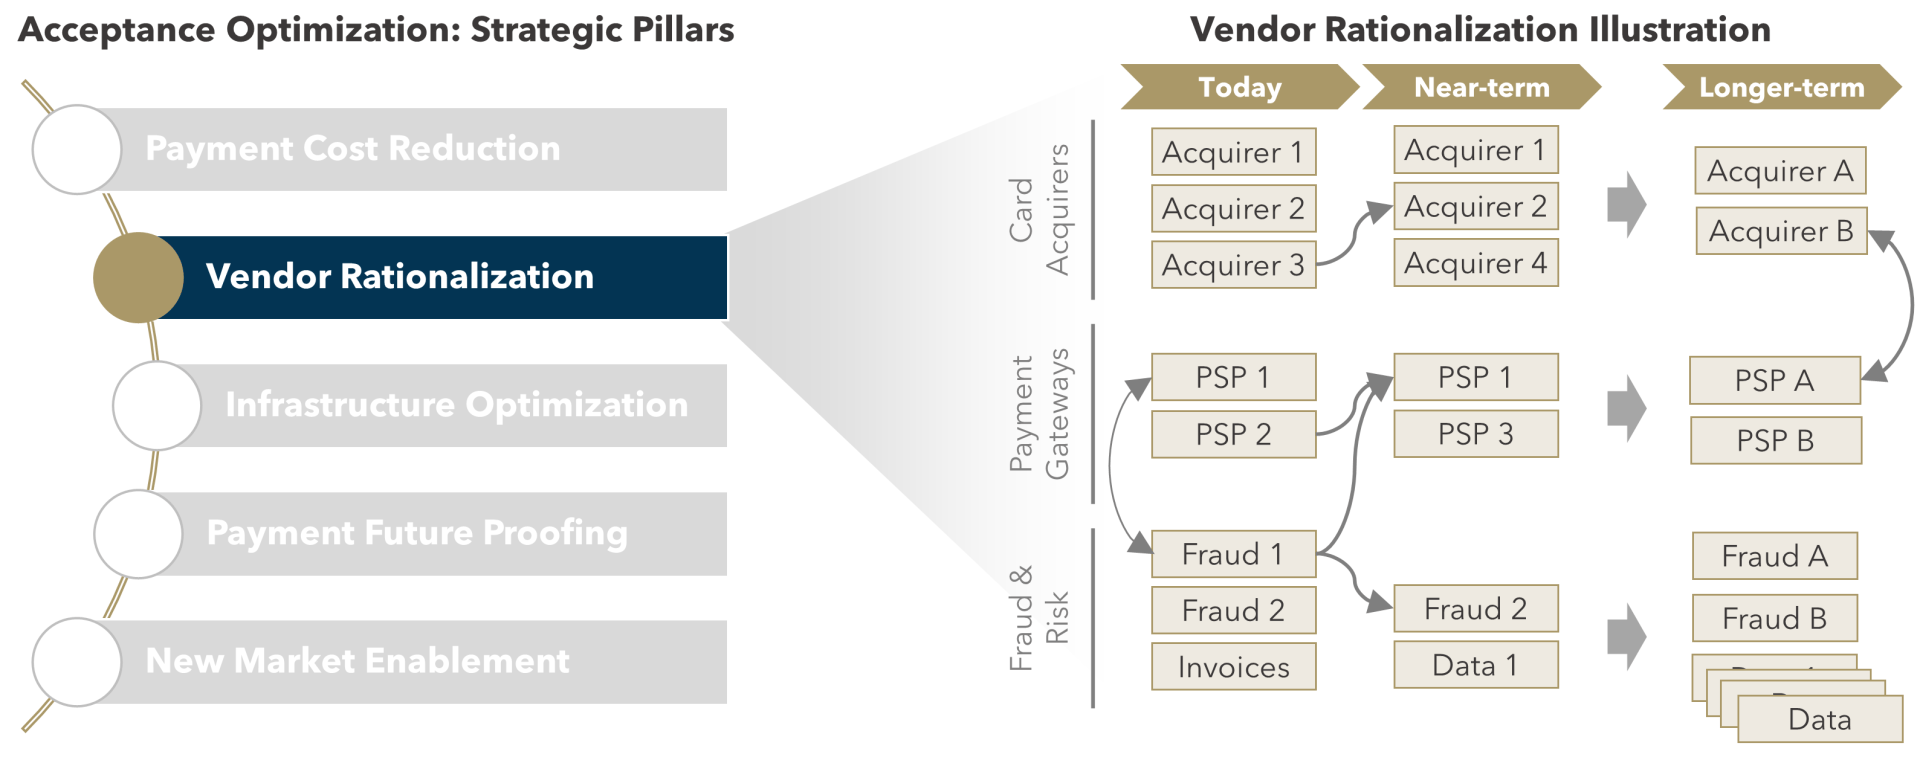 FIGURE 3: Strategic Pillars and Vendor Rationalization Illustration